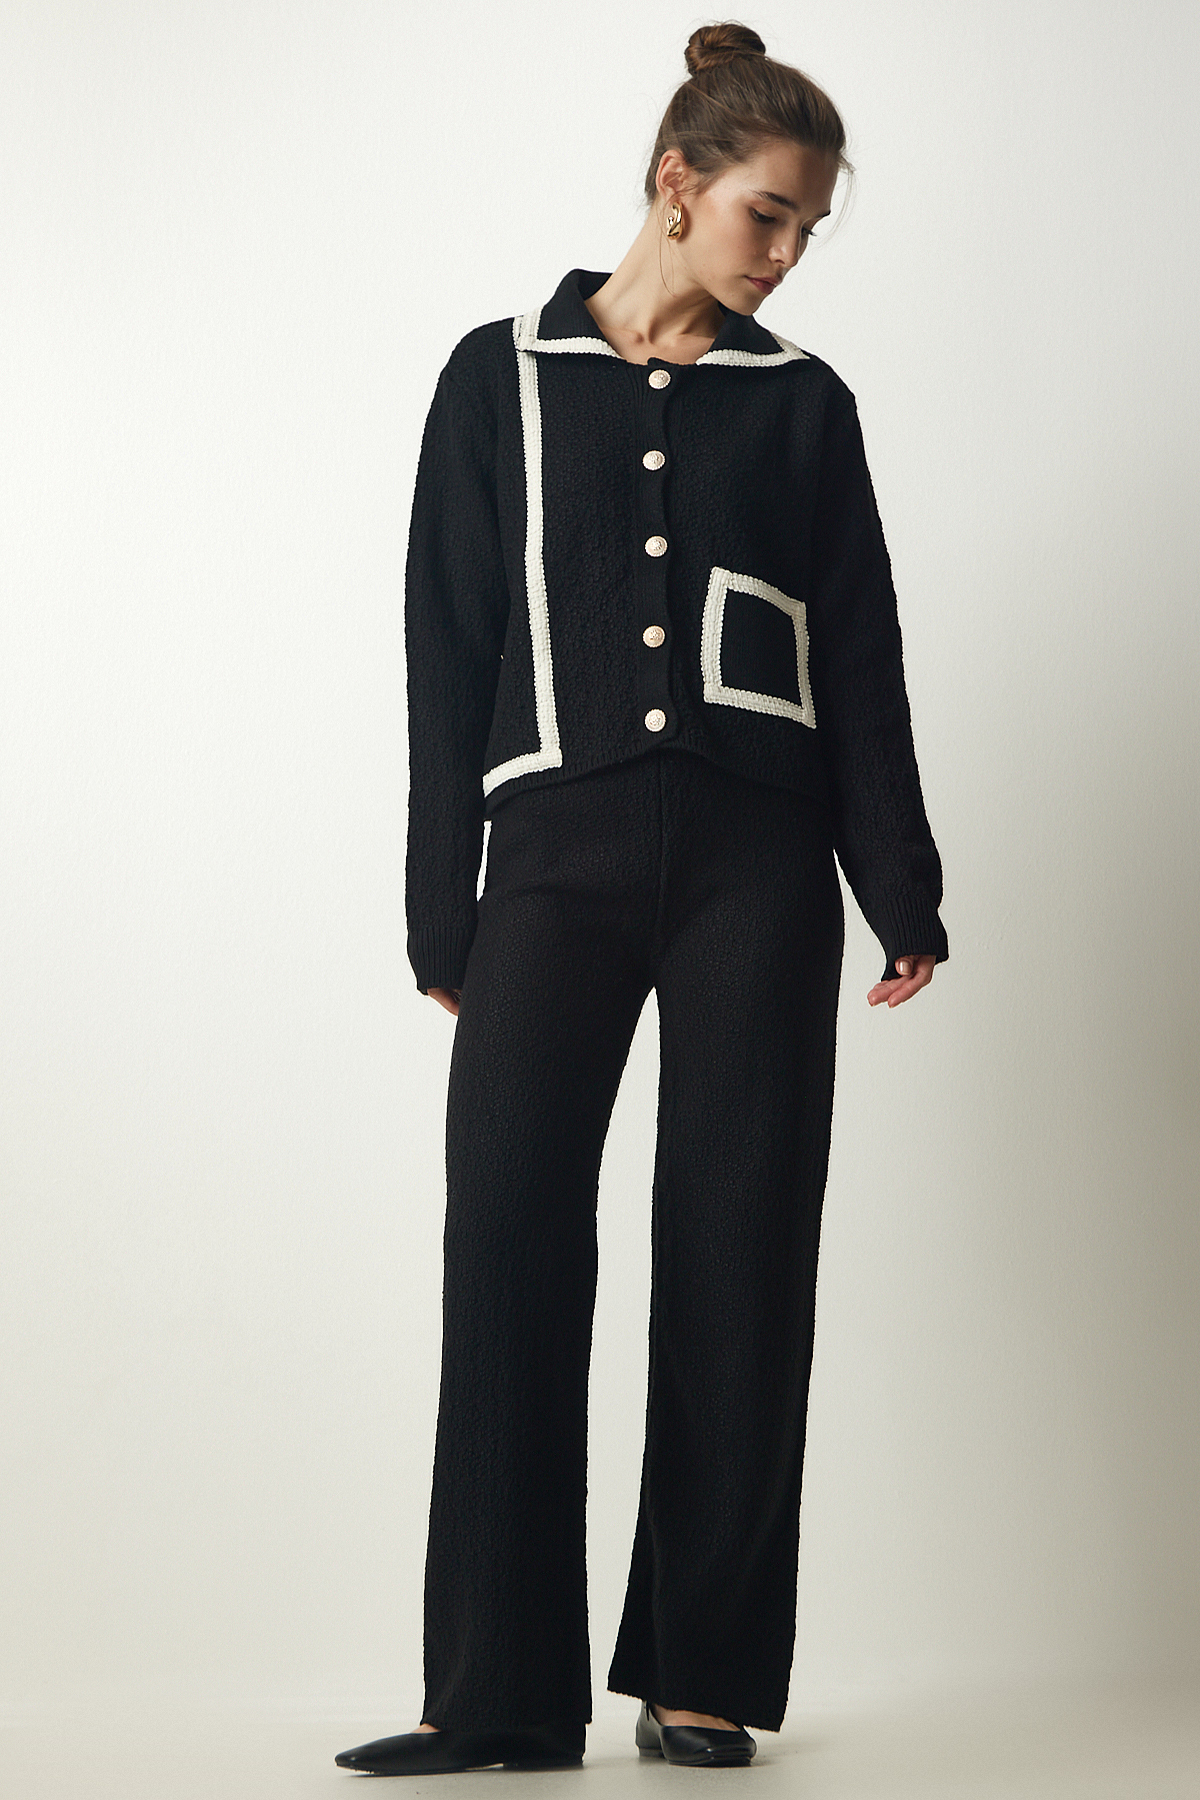 Happiness İstanbul Women's Black Stripe Detailed Knitwear Jacket Pants Suit